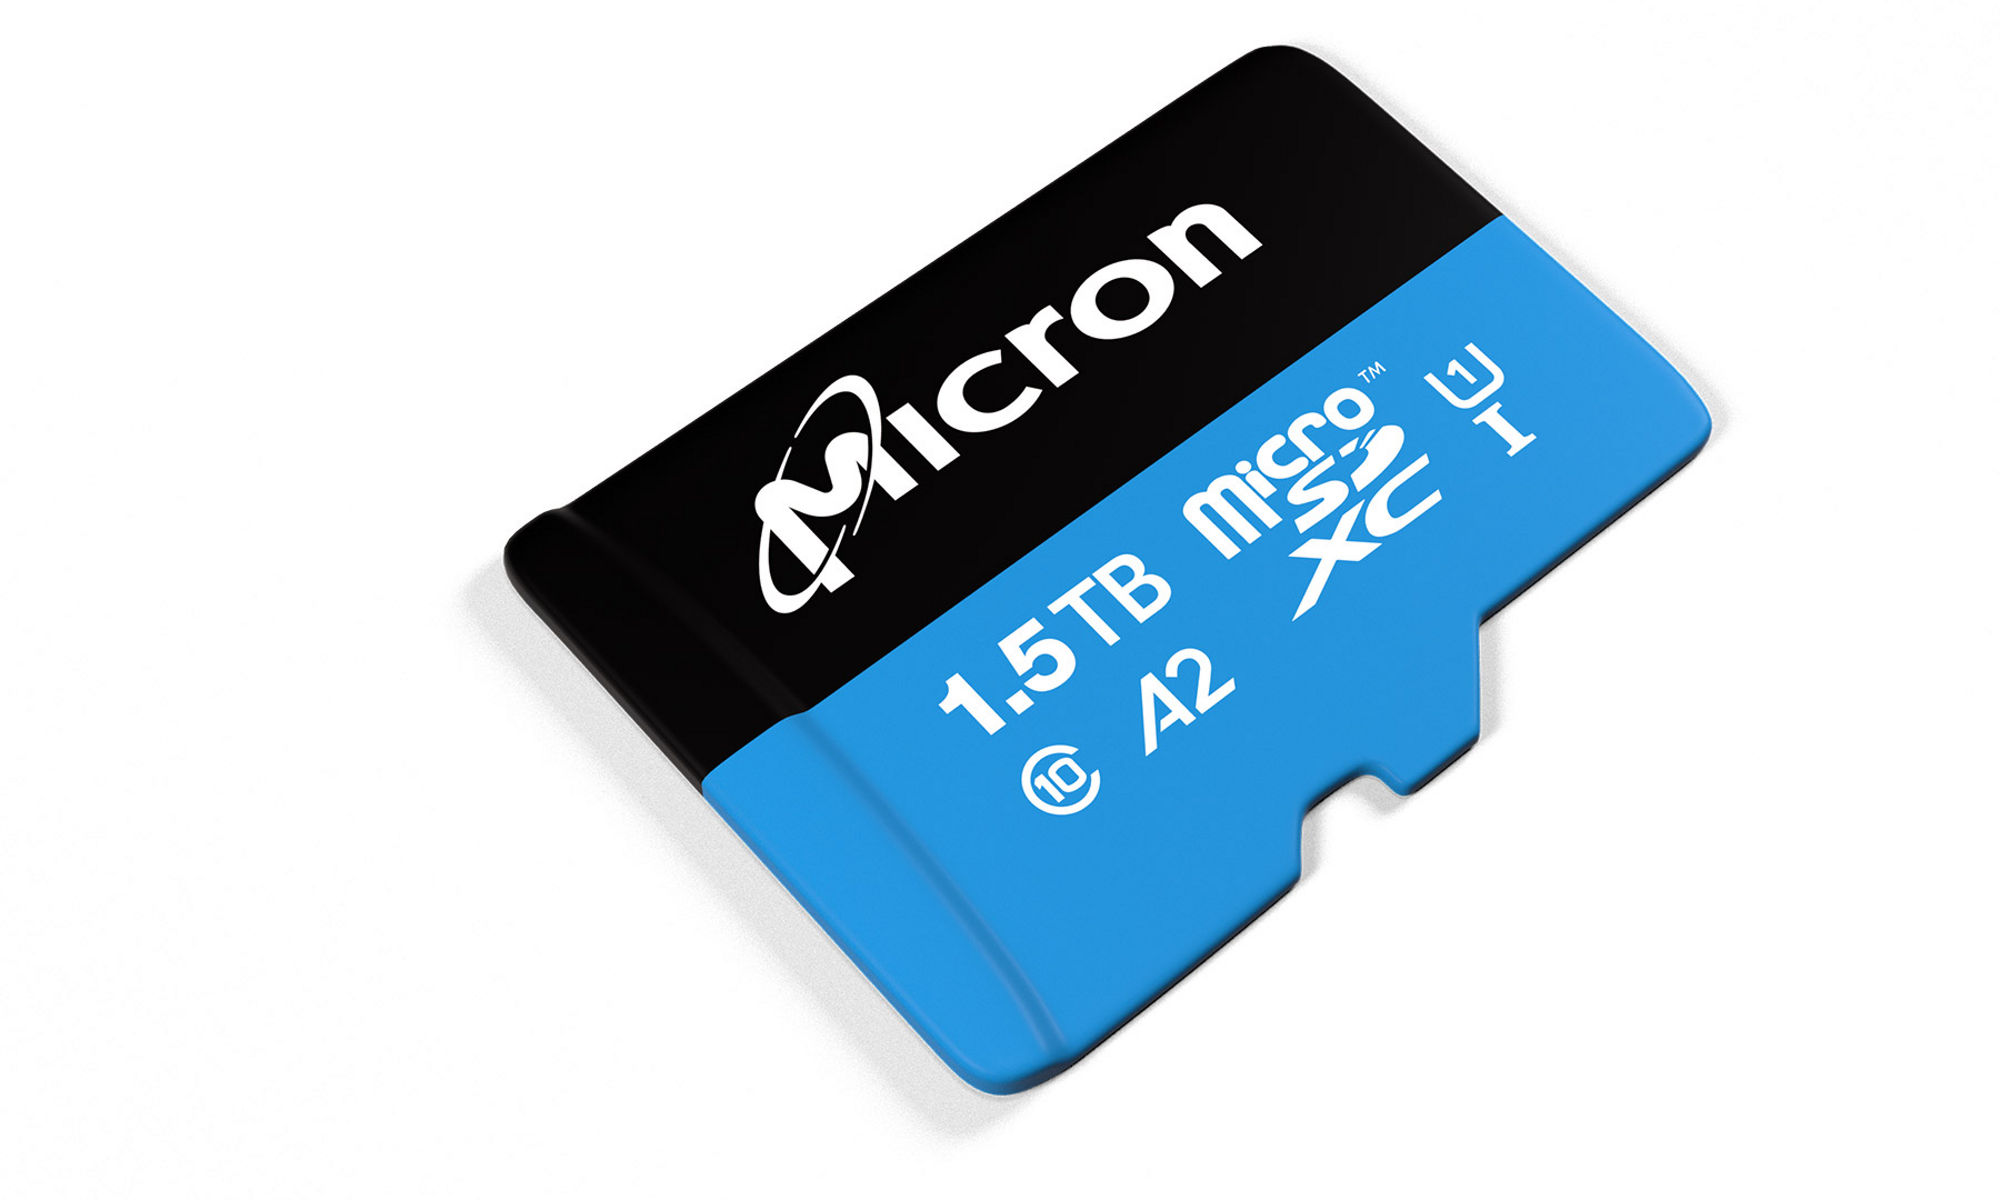 Micron microSD cards